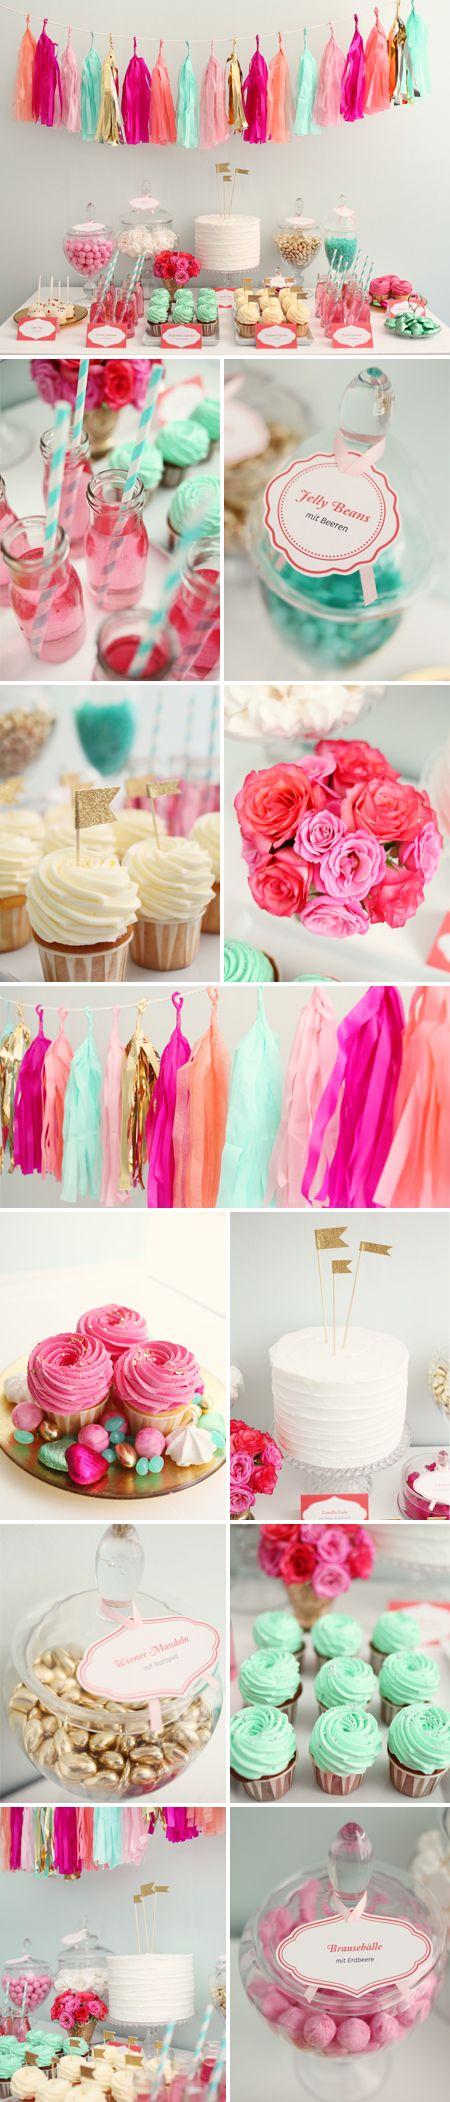 Wedding - Gorgeous Colorful Dessert Table - By Zuckermonarchie